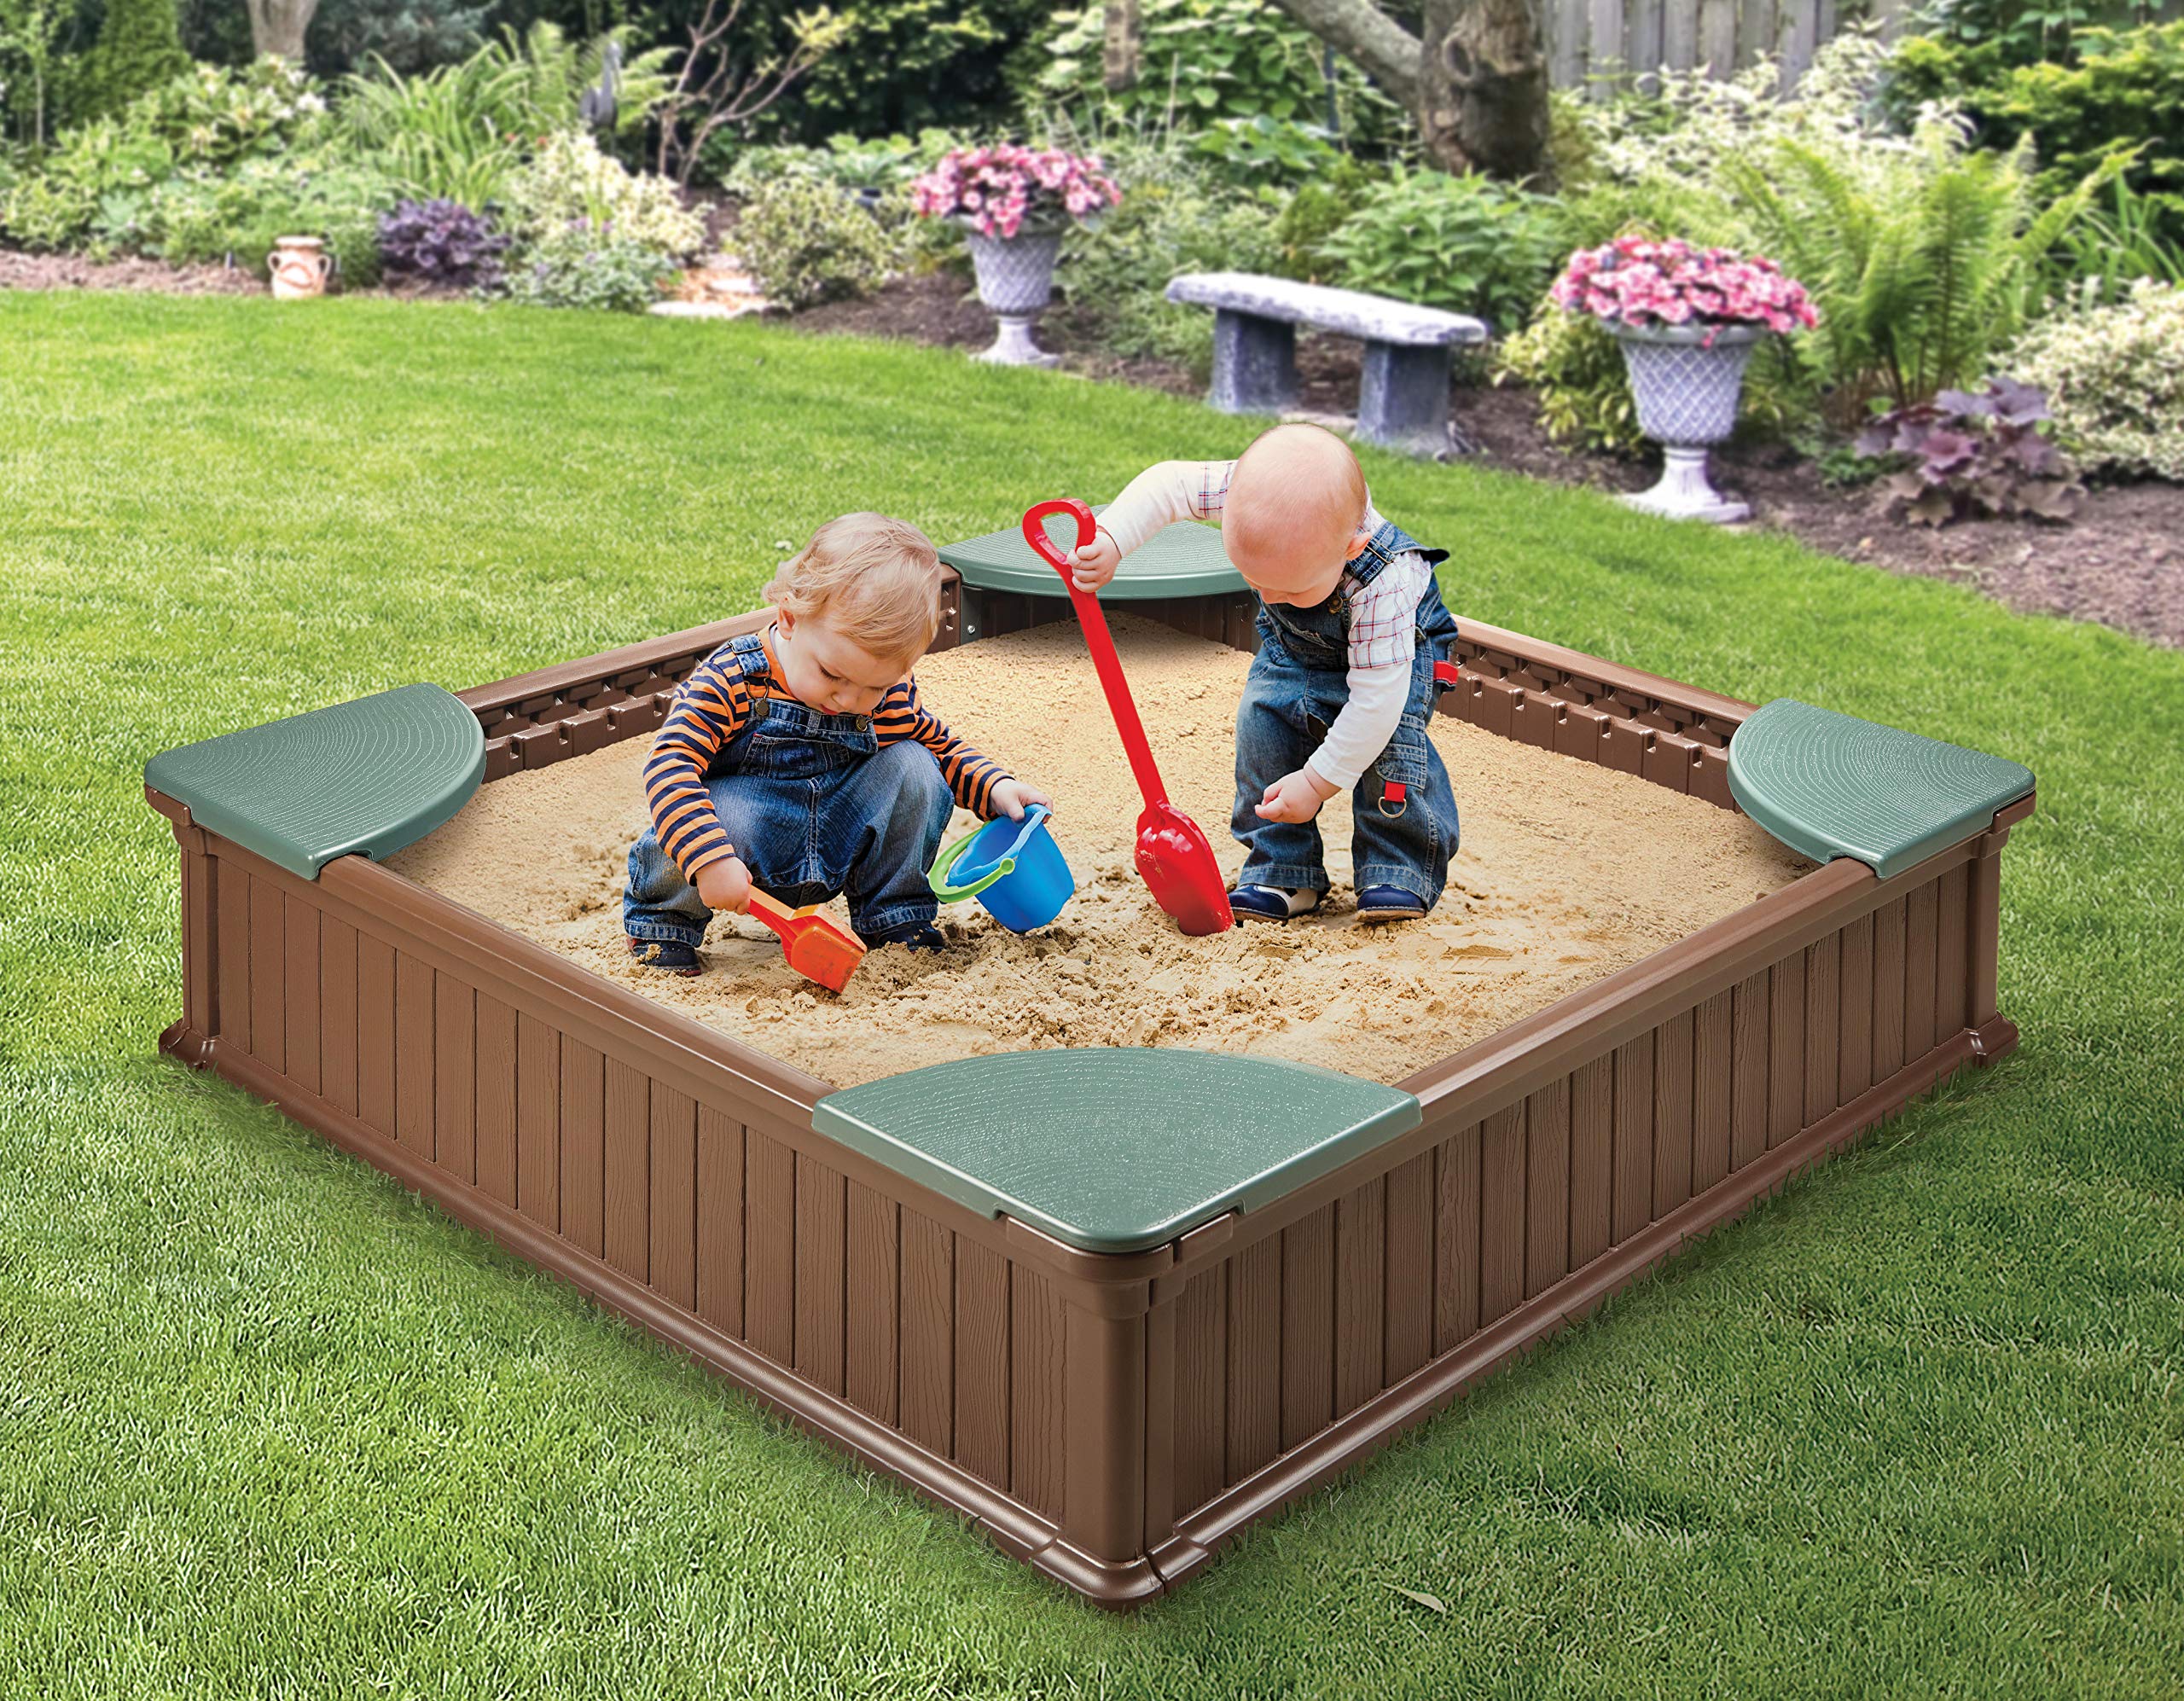 Badger Basket Woodland 2-in-1 Kids Outdoor Sandbox or Garden and Vegetable Planter, Outdoor Play Equipment - Brown/Green